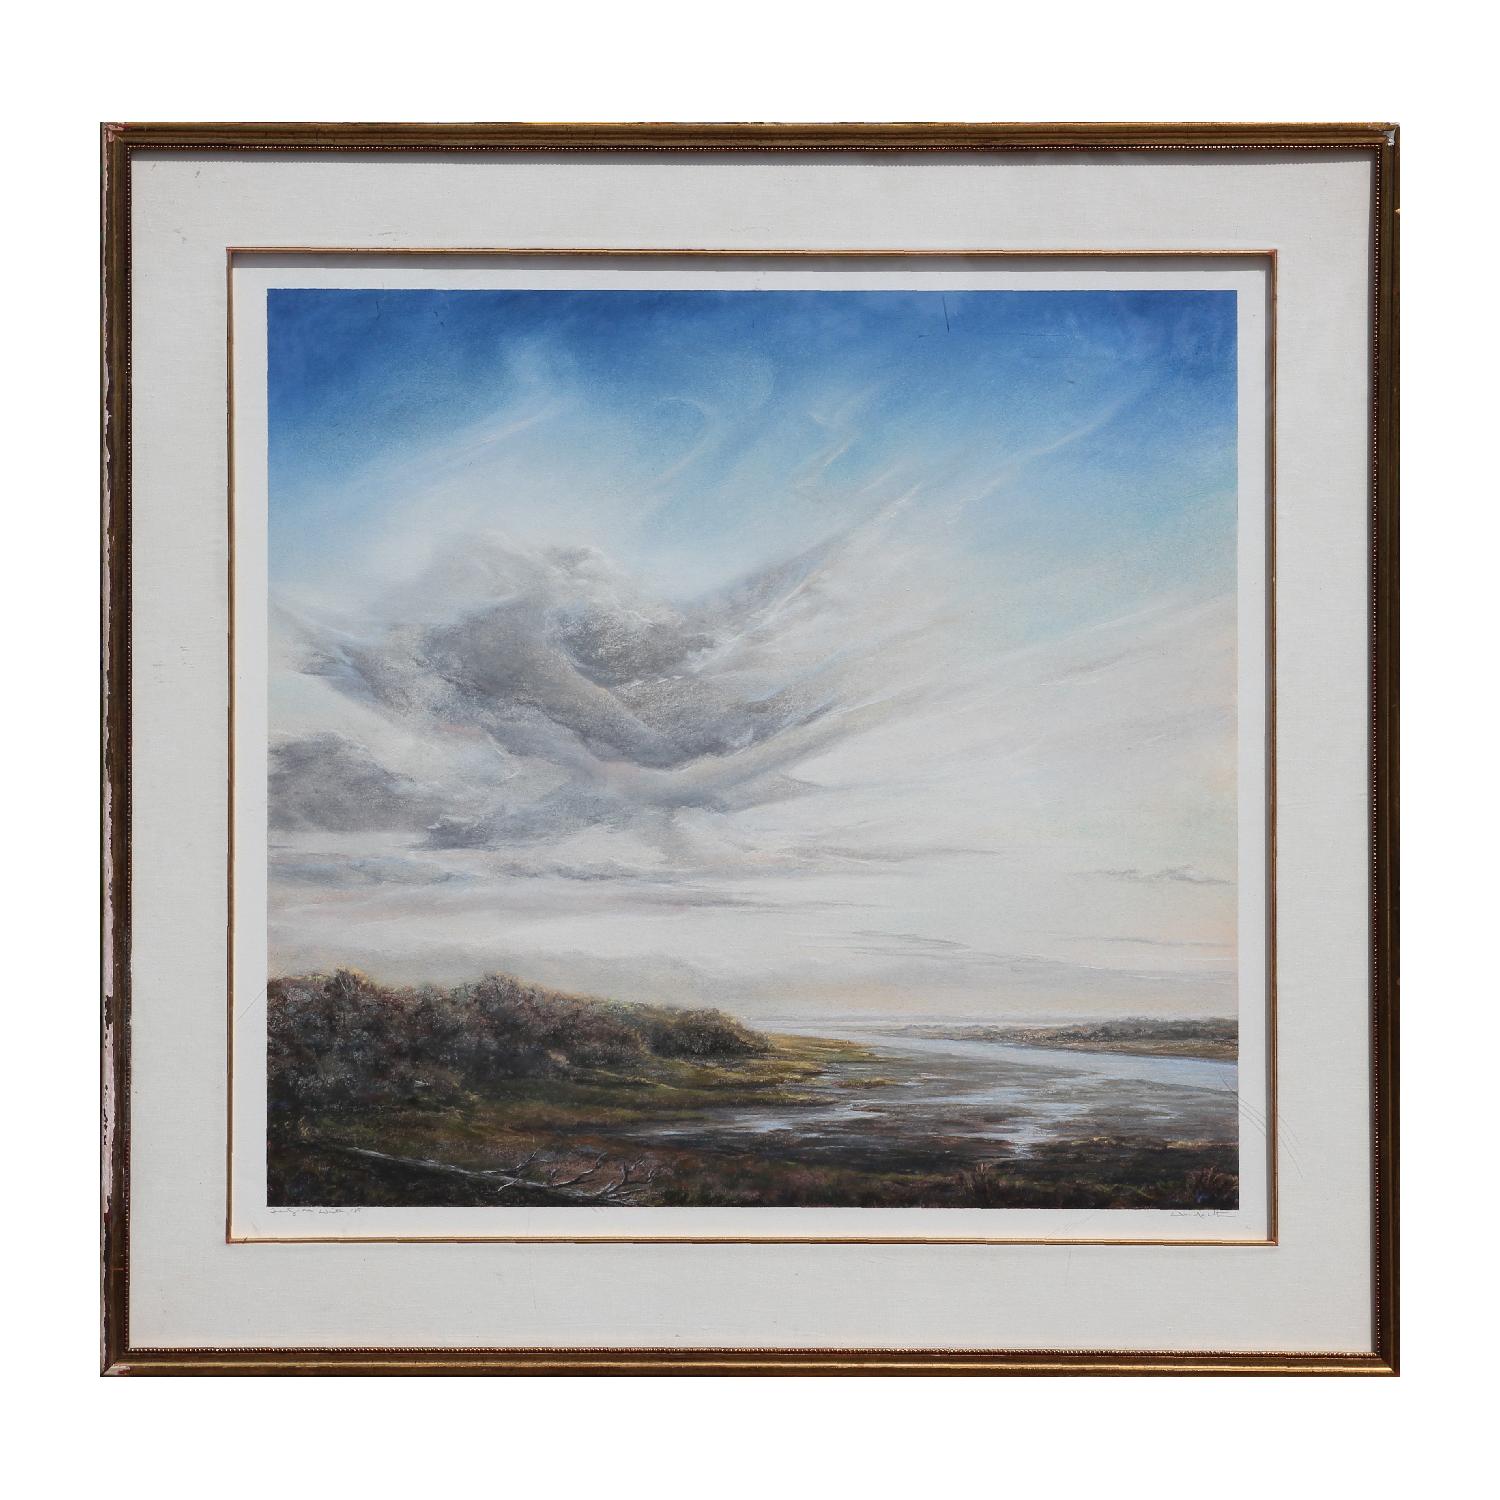 William McWhorter Landscape Painting - "Twenty-One Winter" Large Sublime Pastel River Landscape